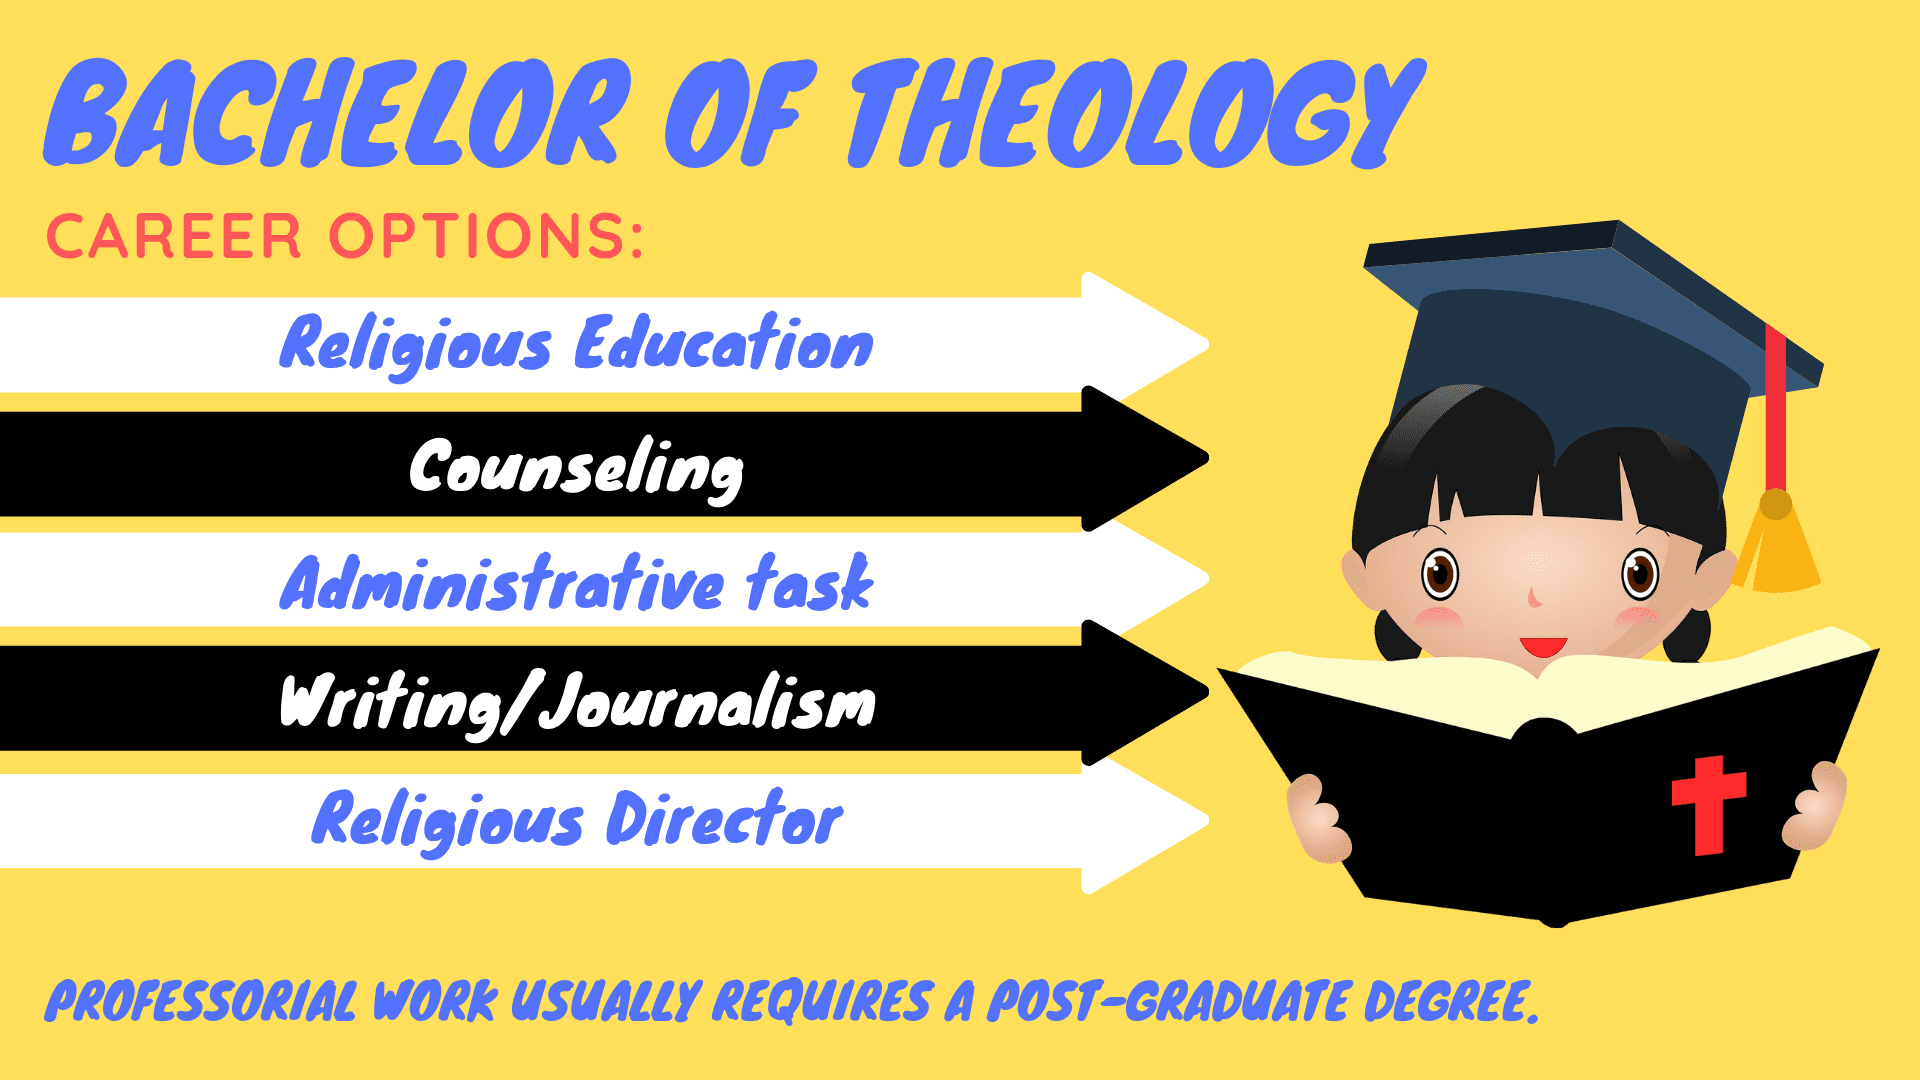 Theology careers